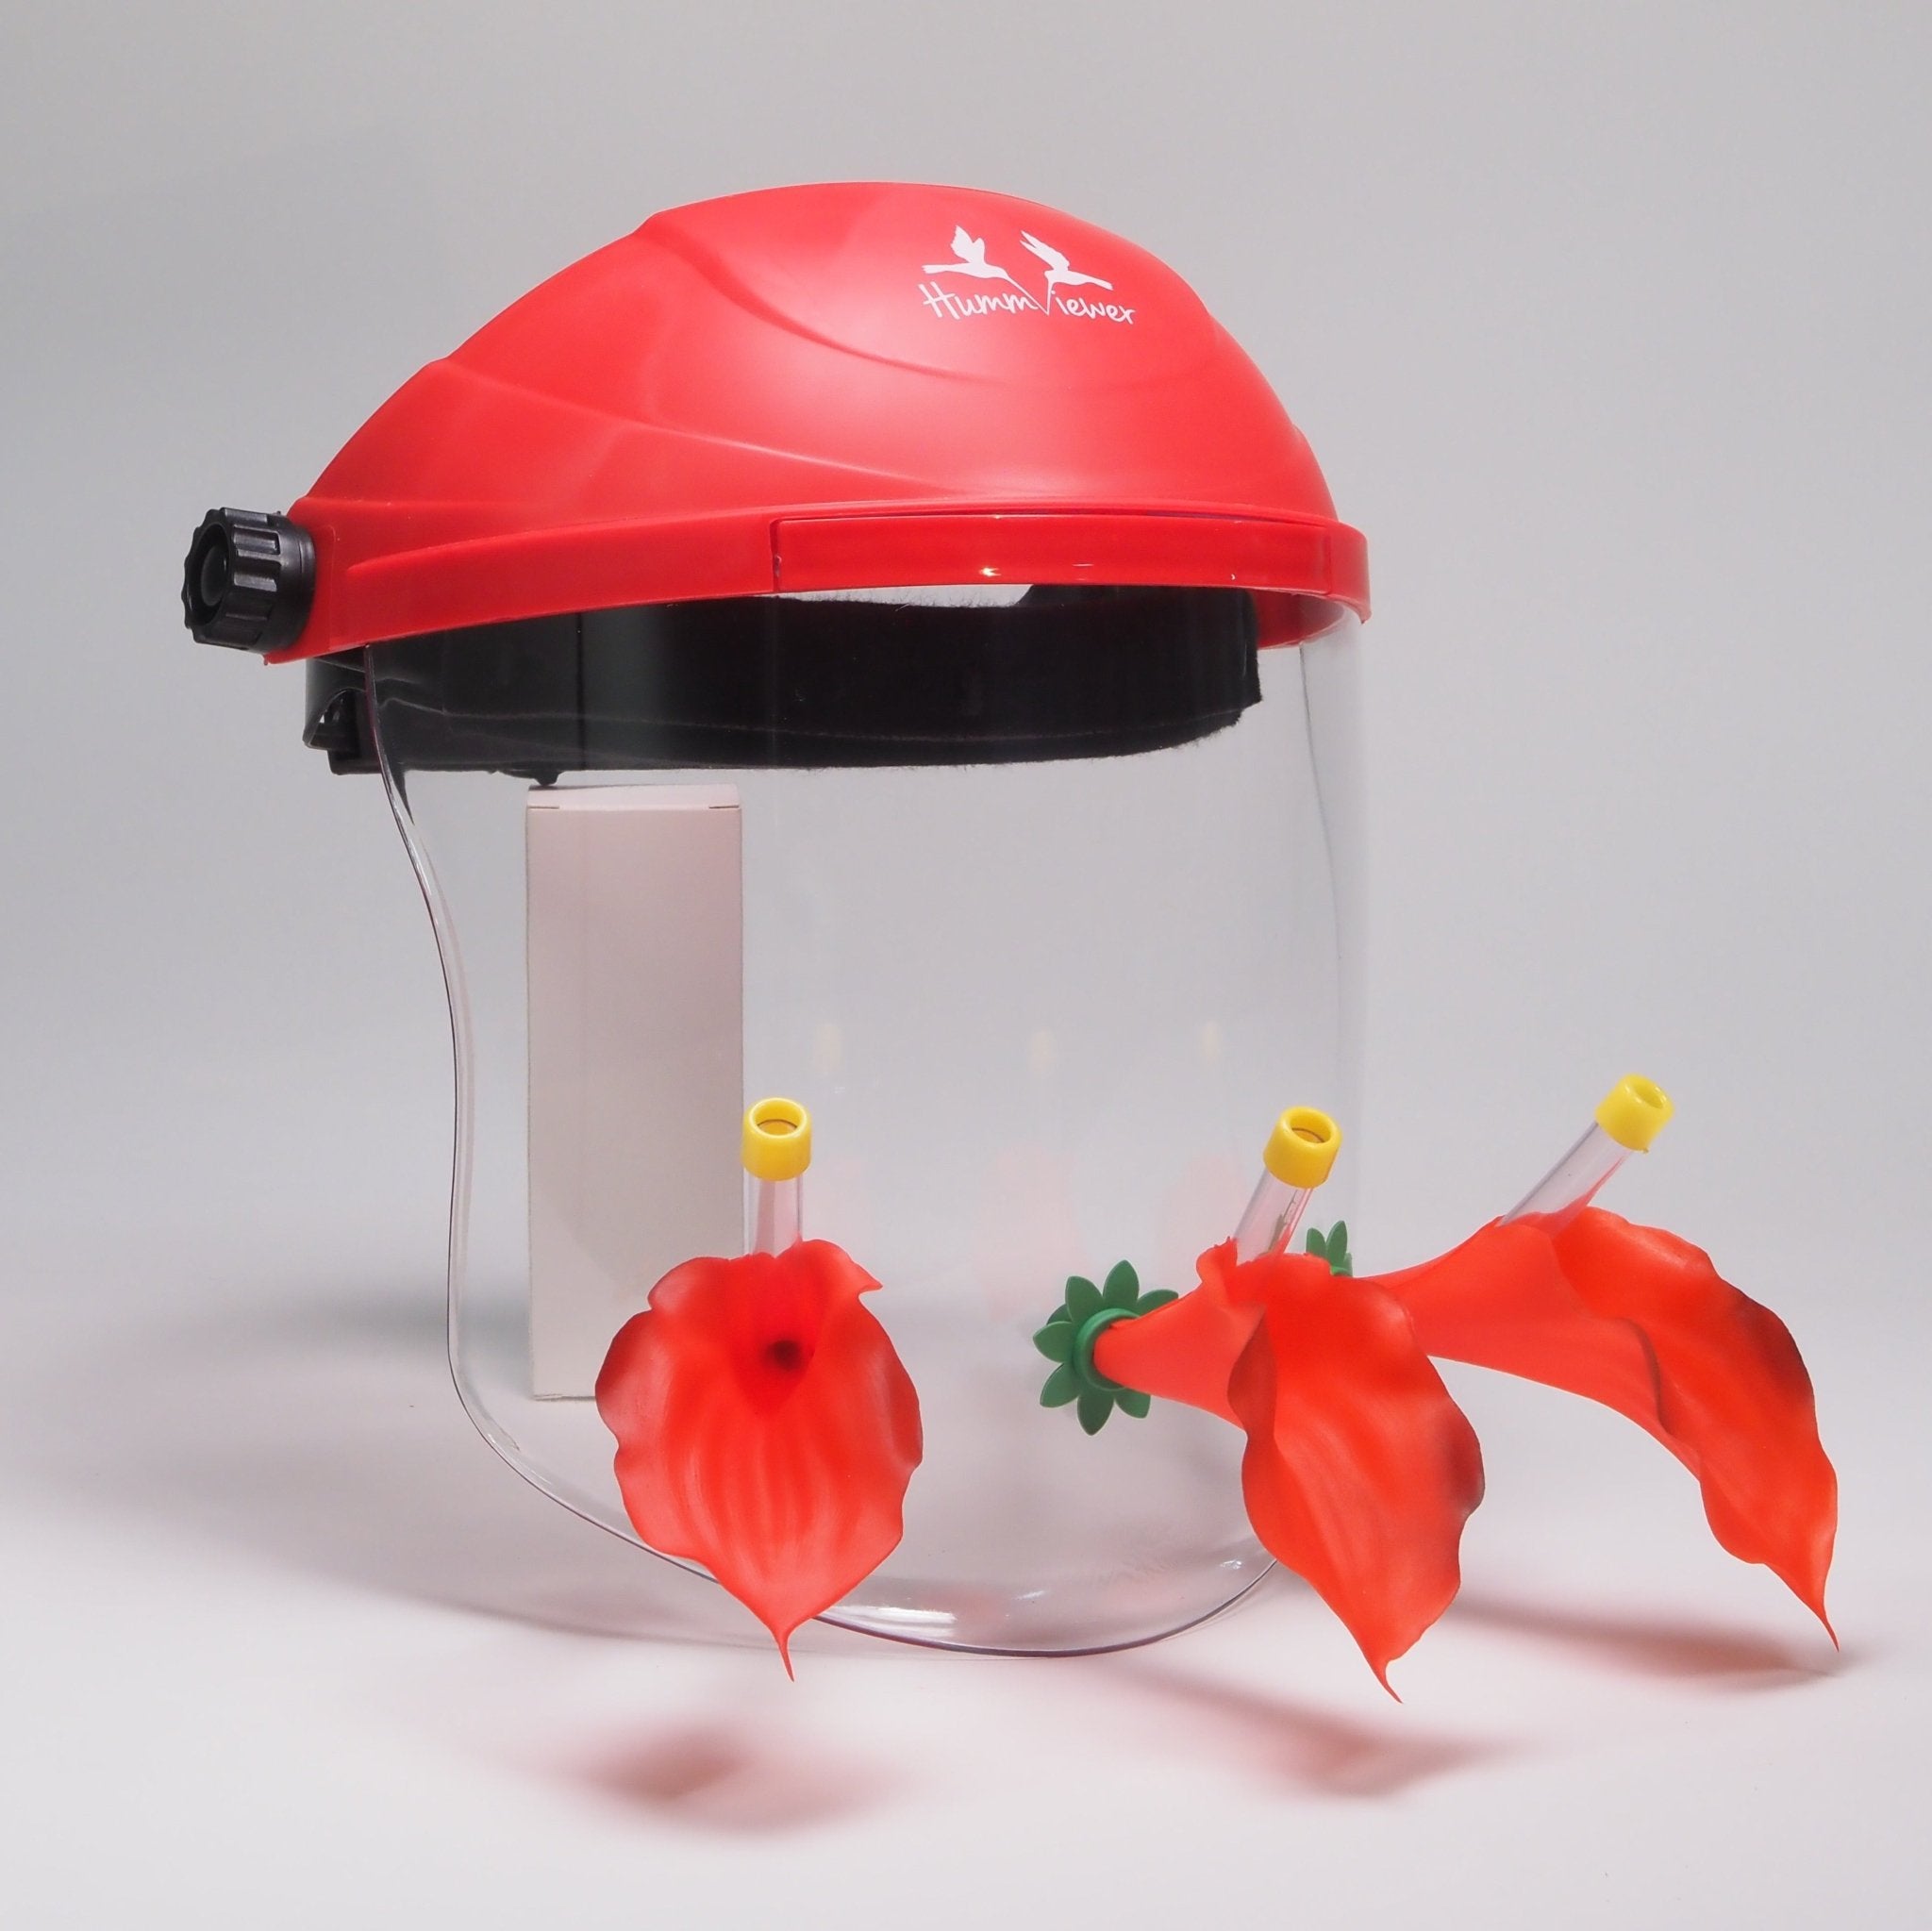 HummViewer is a wearable hummingbird feeder